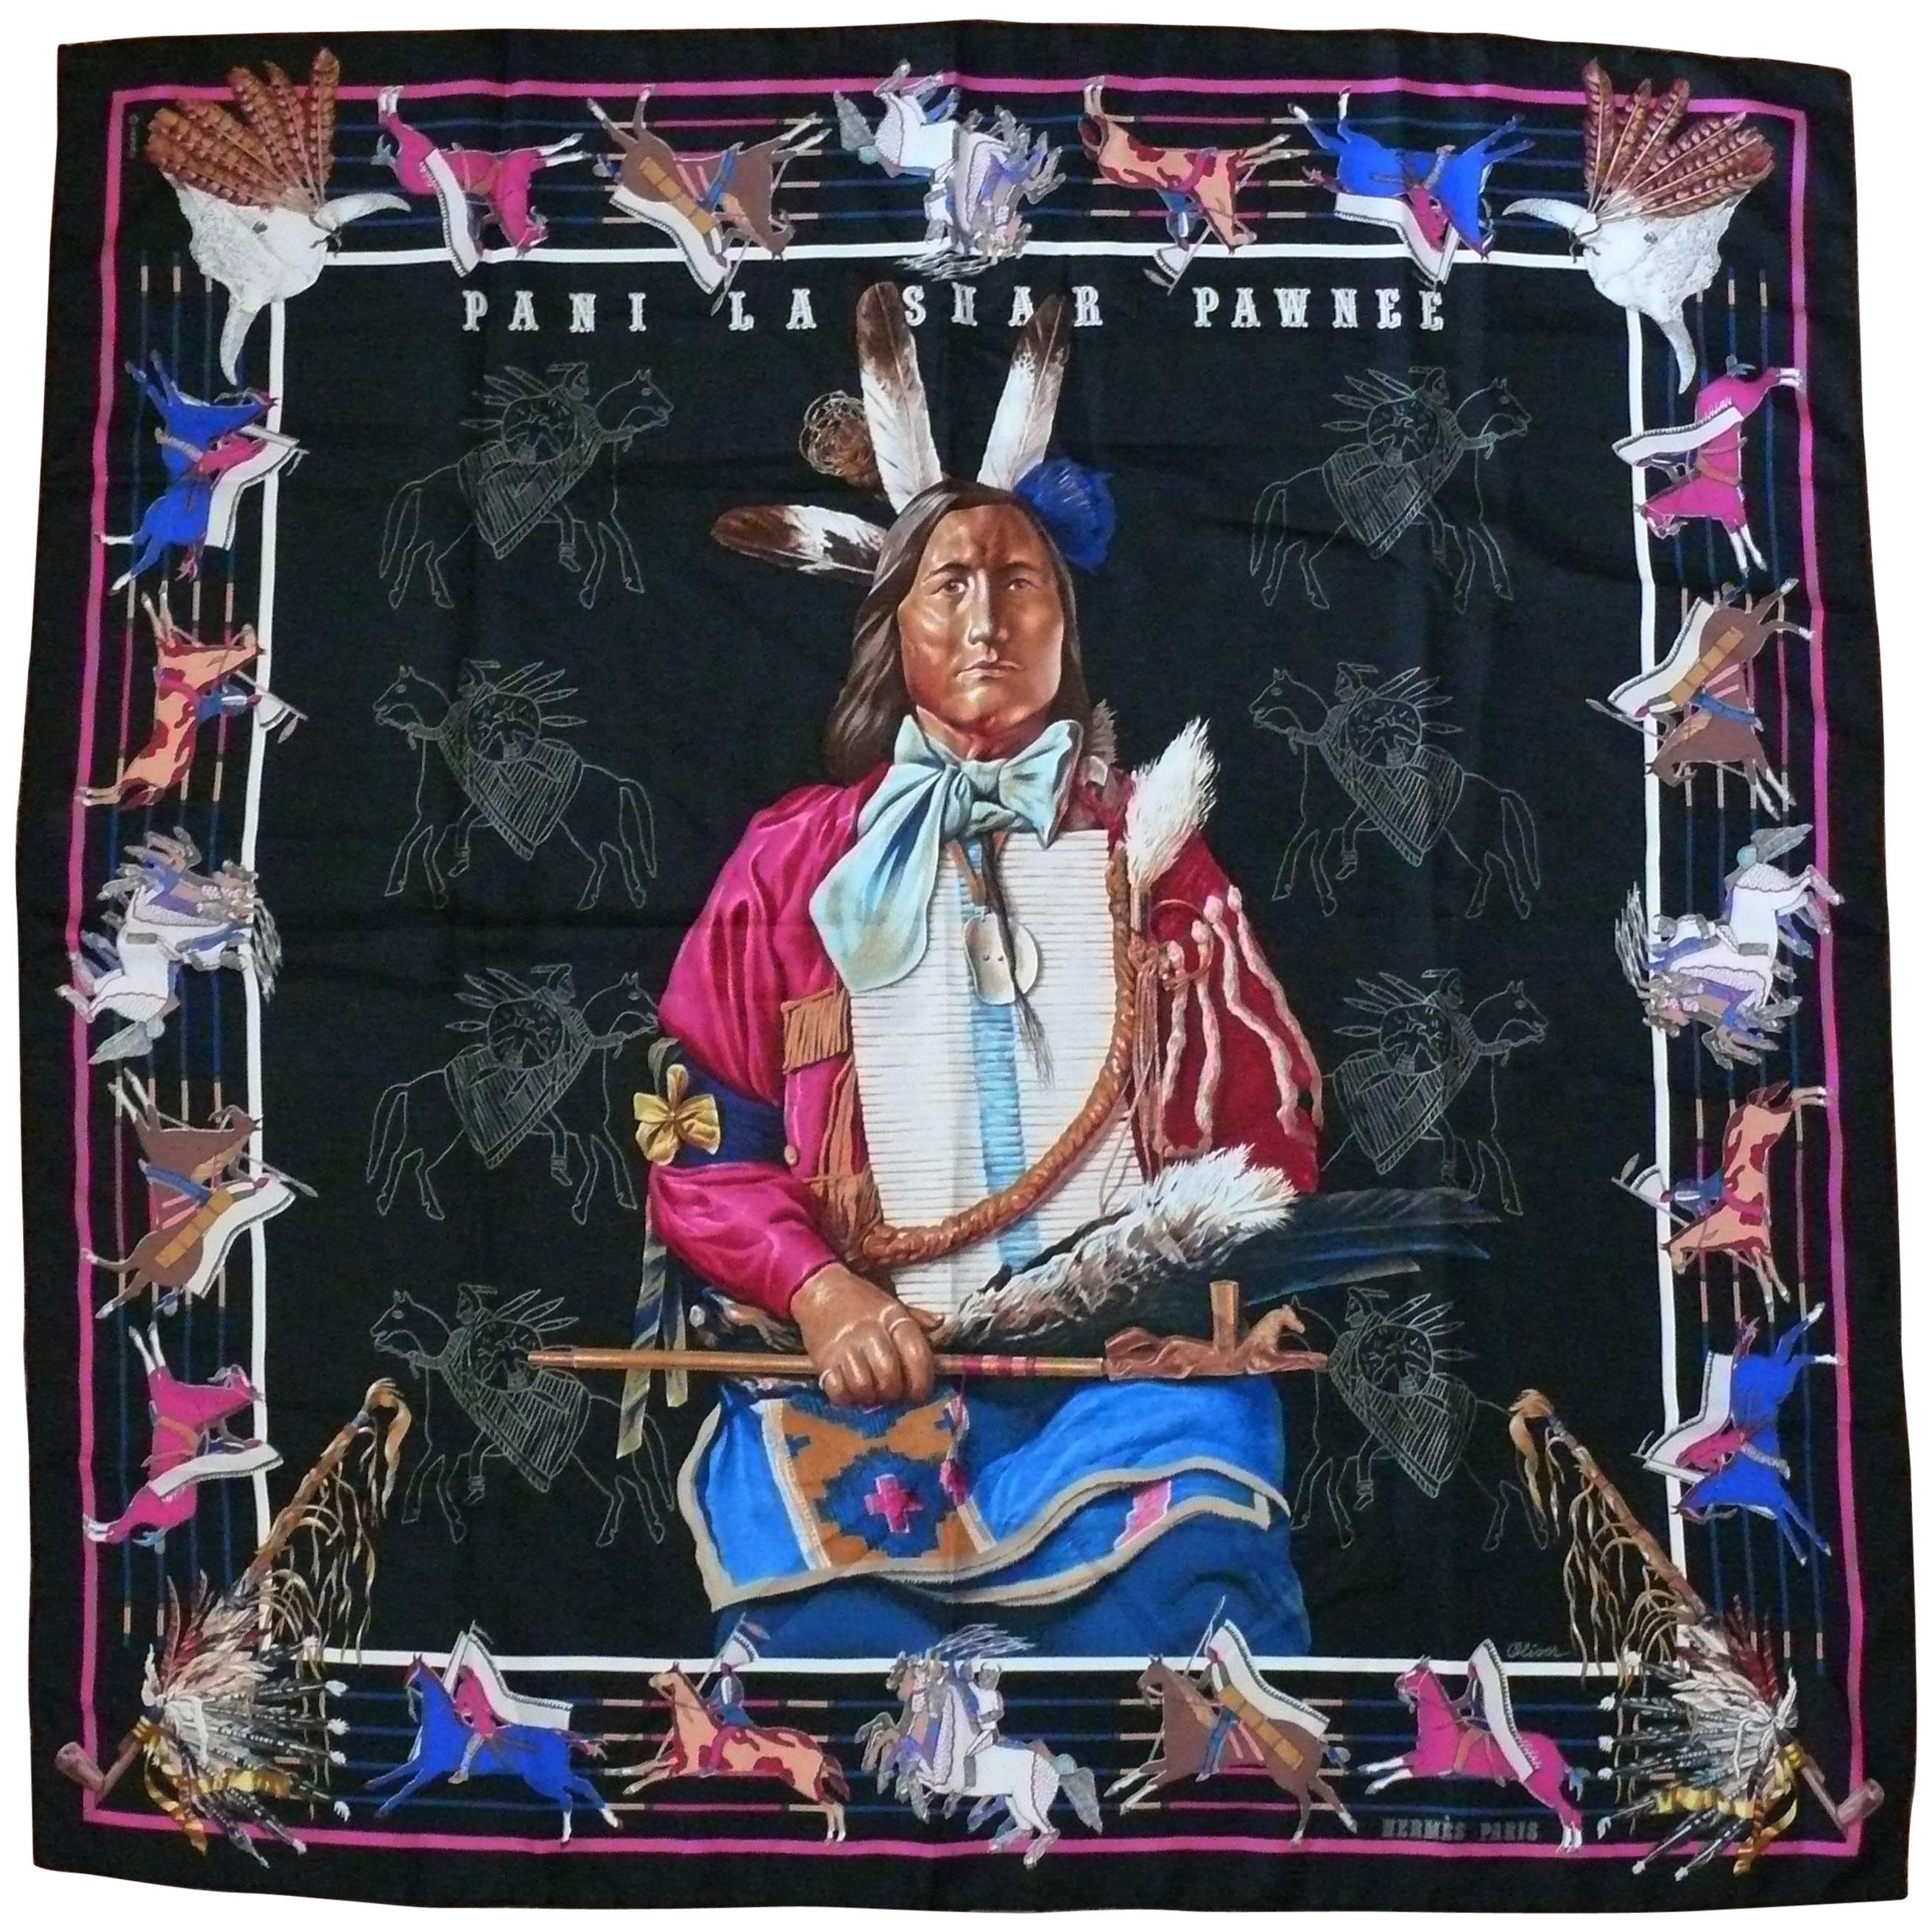 Hermes Rare Silk Carre Scarf "Pani La Shar Pawnee" by Kermit Oliver